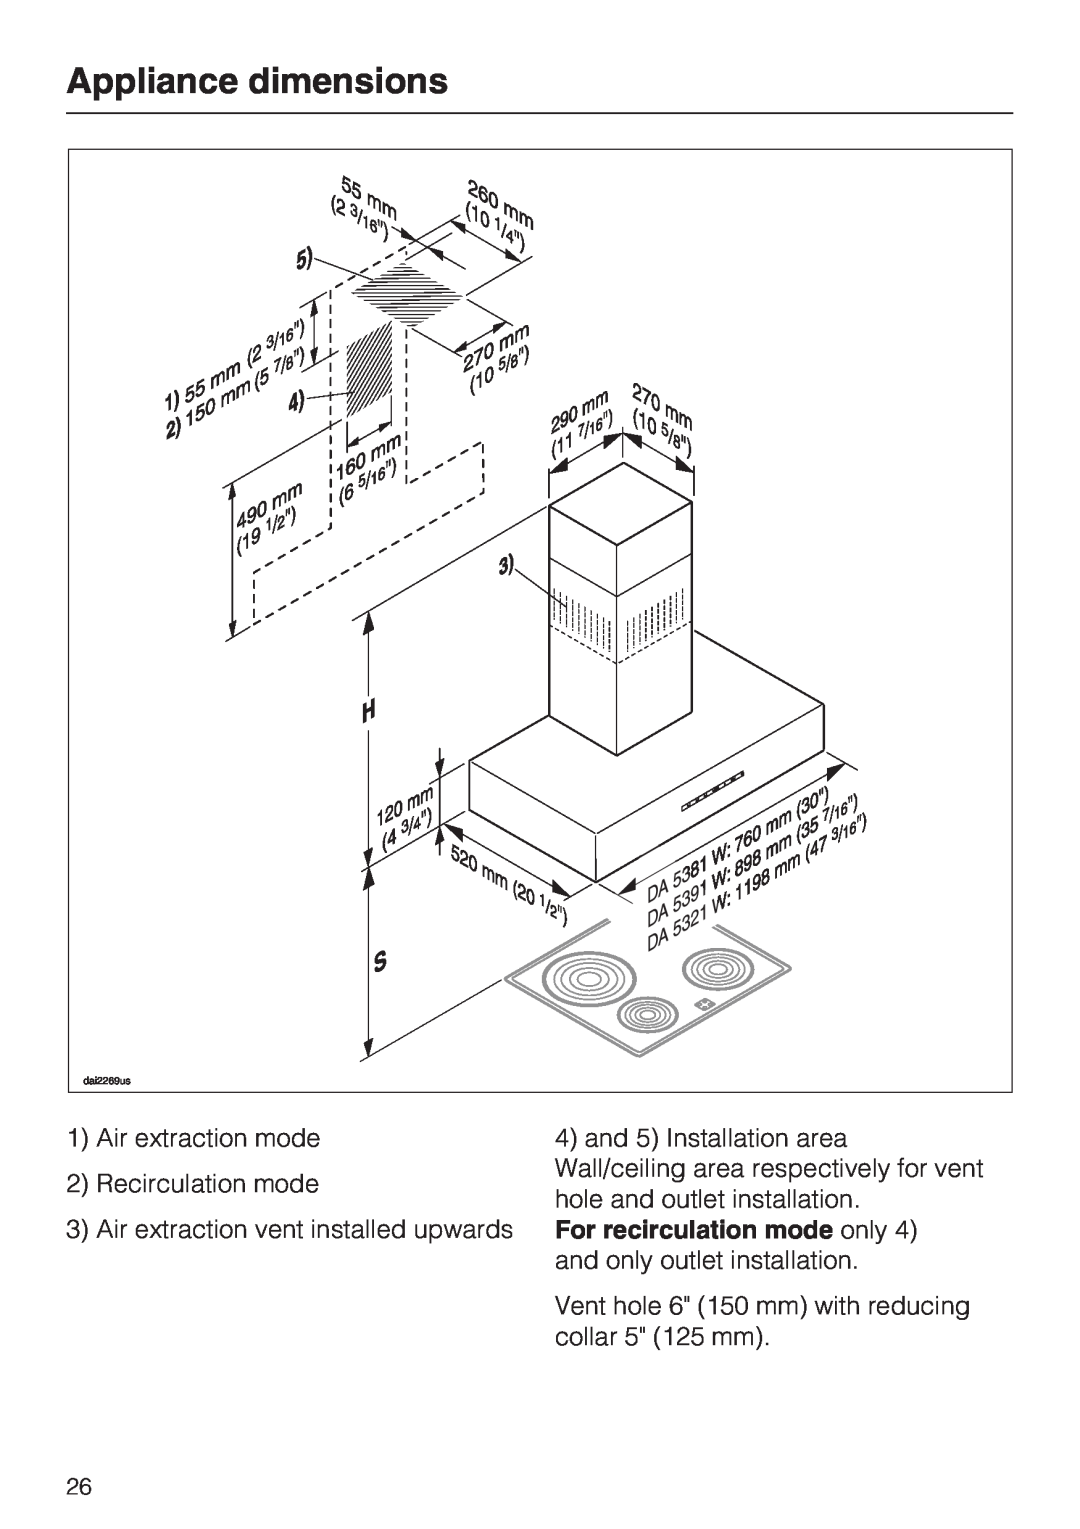 Miele DA 5381 W Appliance dimensions, 1Air extraction mode 2Recirculation mode, 3Air extraction vent installed upwards 